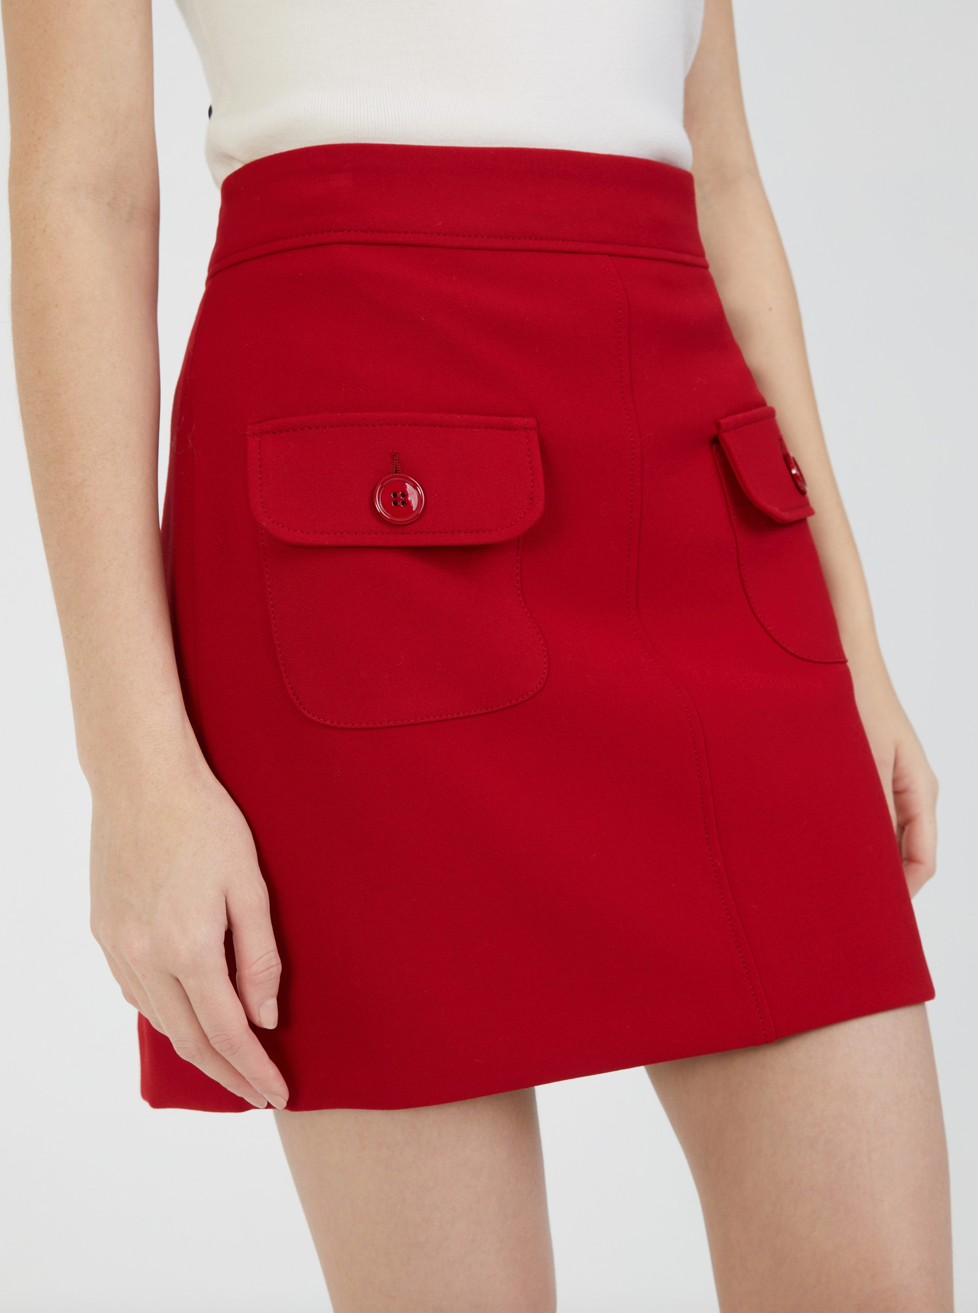 Seductive Paris Skirt in Cherry